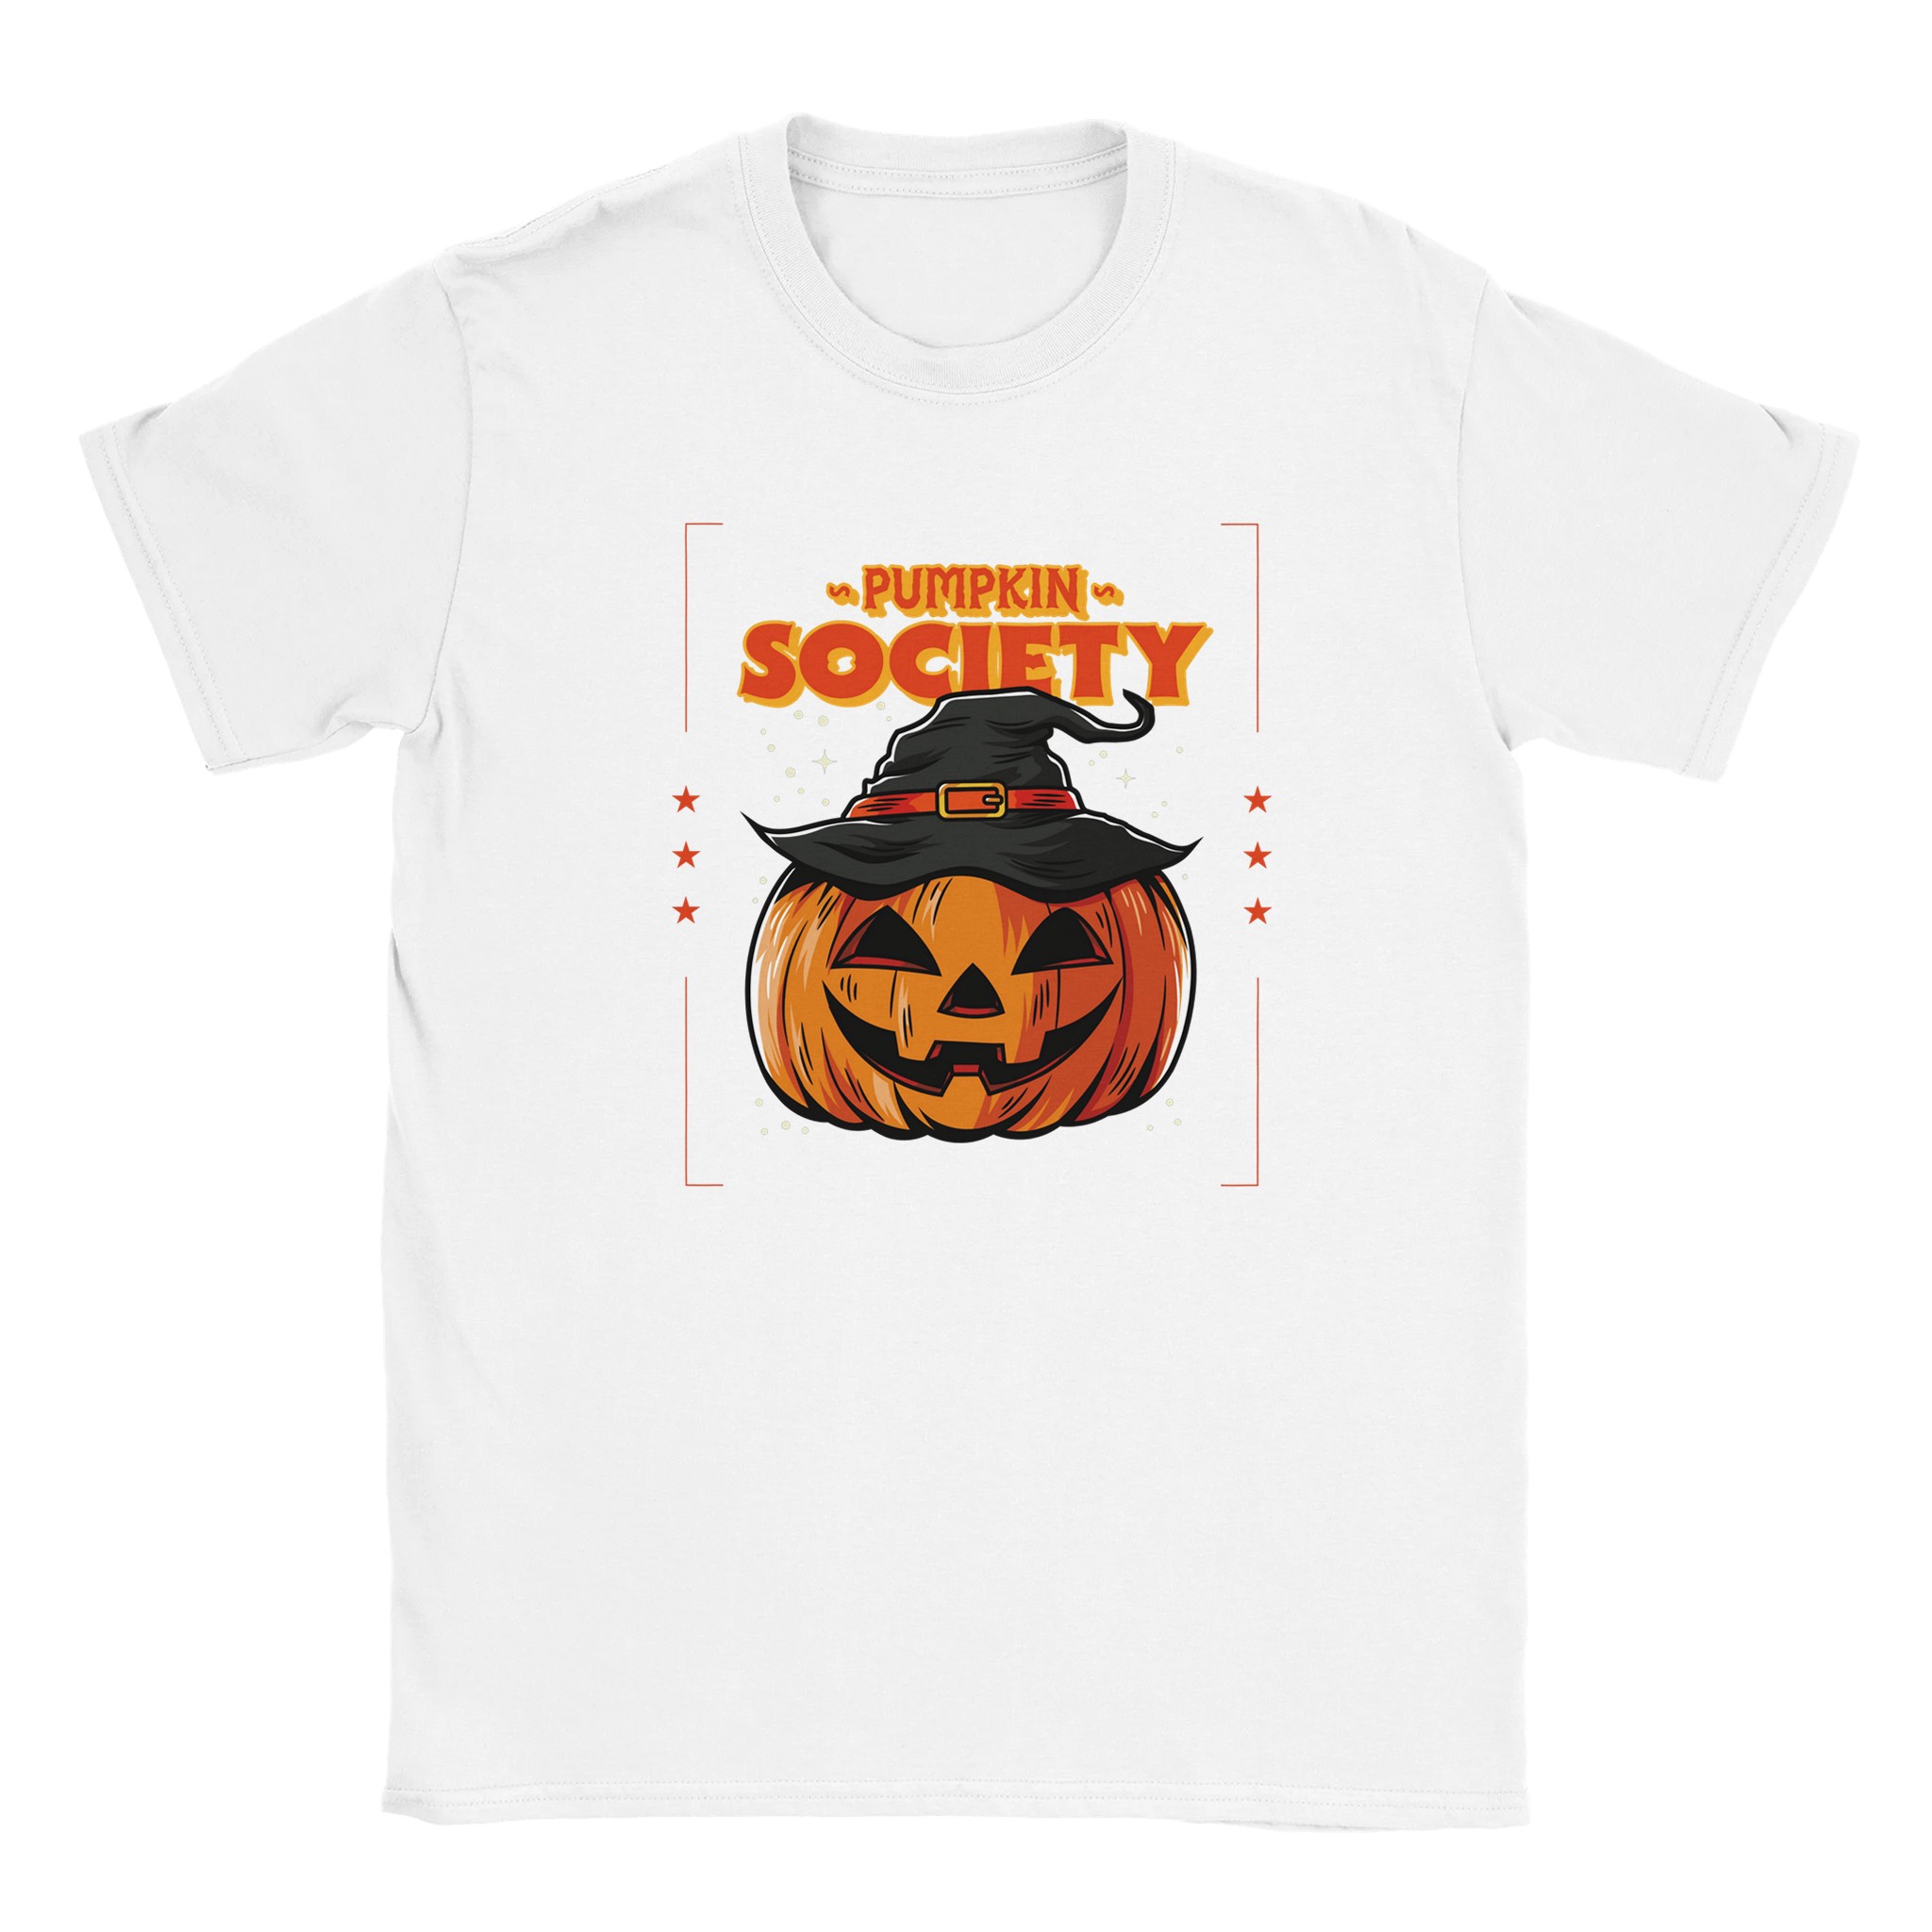 Pumpkin society tshirt design